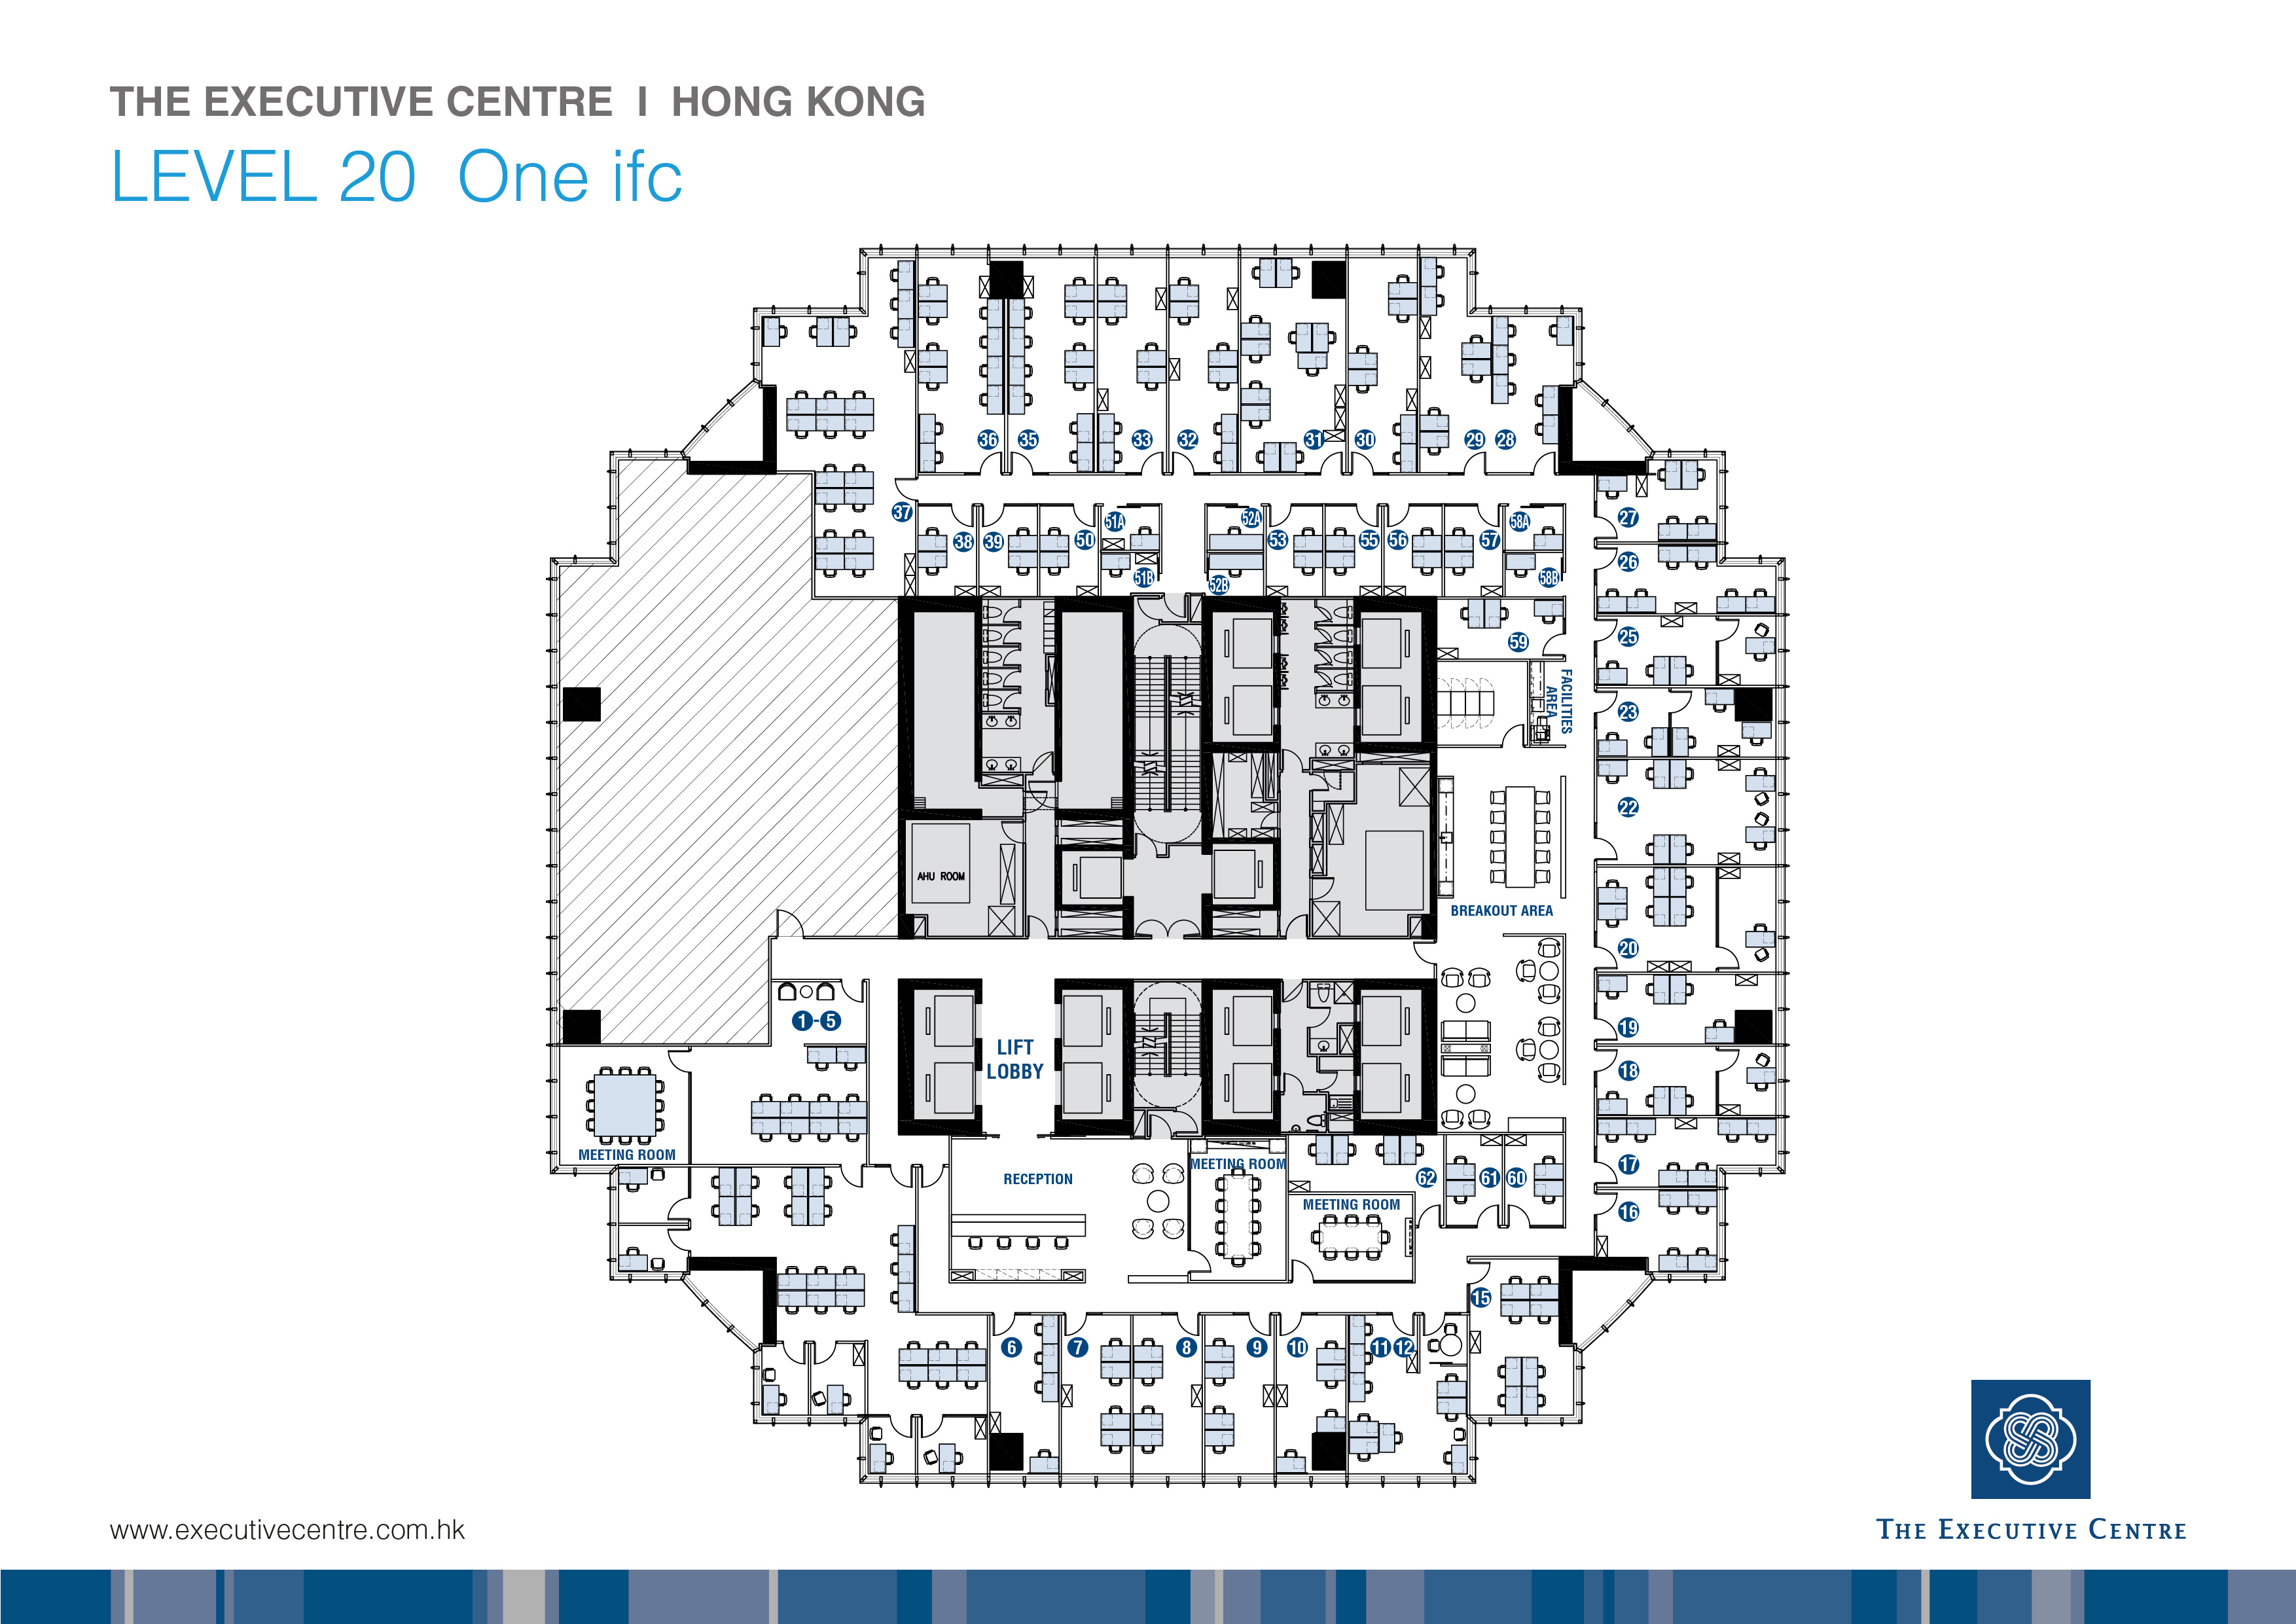 The Executive Centre One ifc Hong Kong Serviced